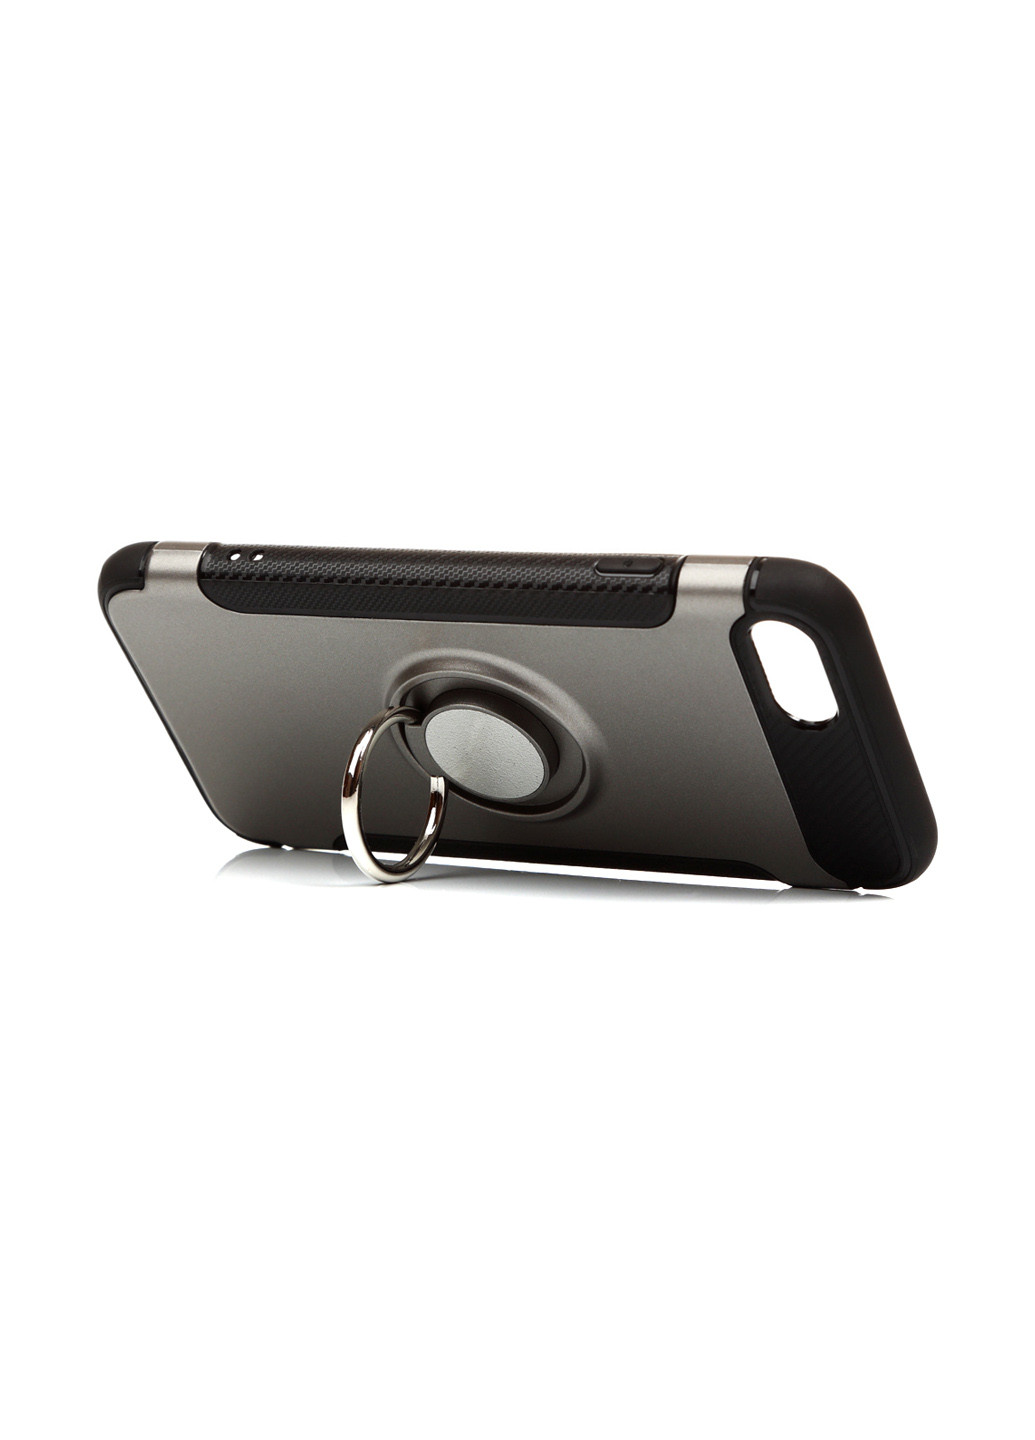 Чохол Magnetic Ring Stand для Apple iPhone 7/8 Grey (сімсот одна тисяча сімсот сімдесят три) BeCover magnetic ring stand для apple iphone 7/8 grey (701773) (145630404)